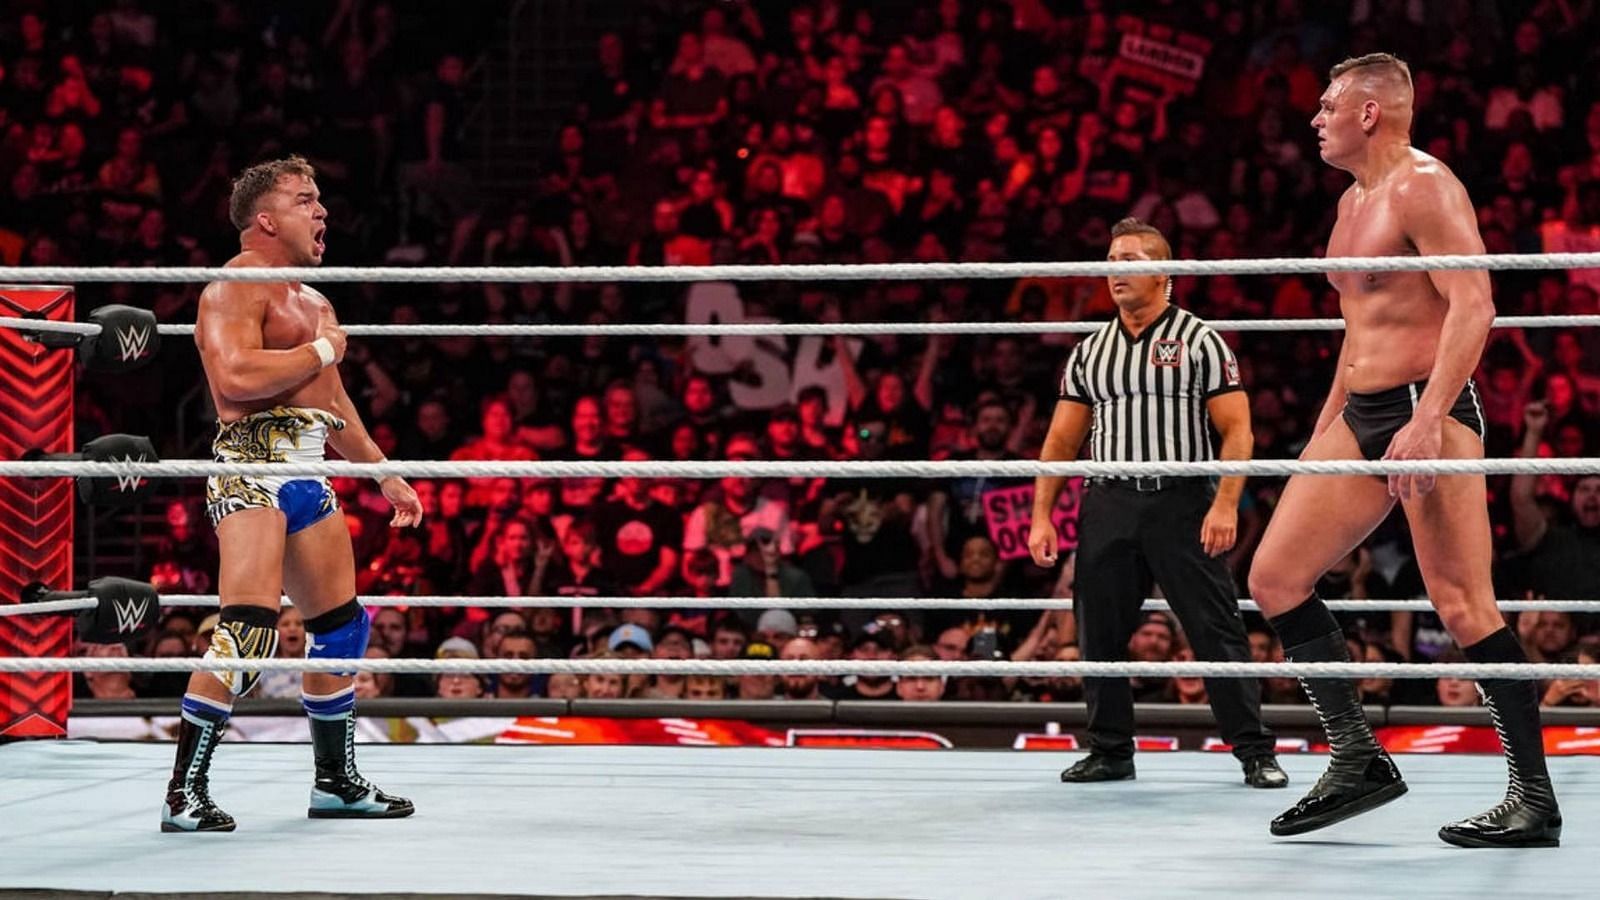 Chad gable vs Gunther on WWE RAW